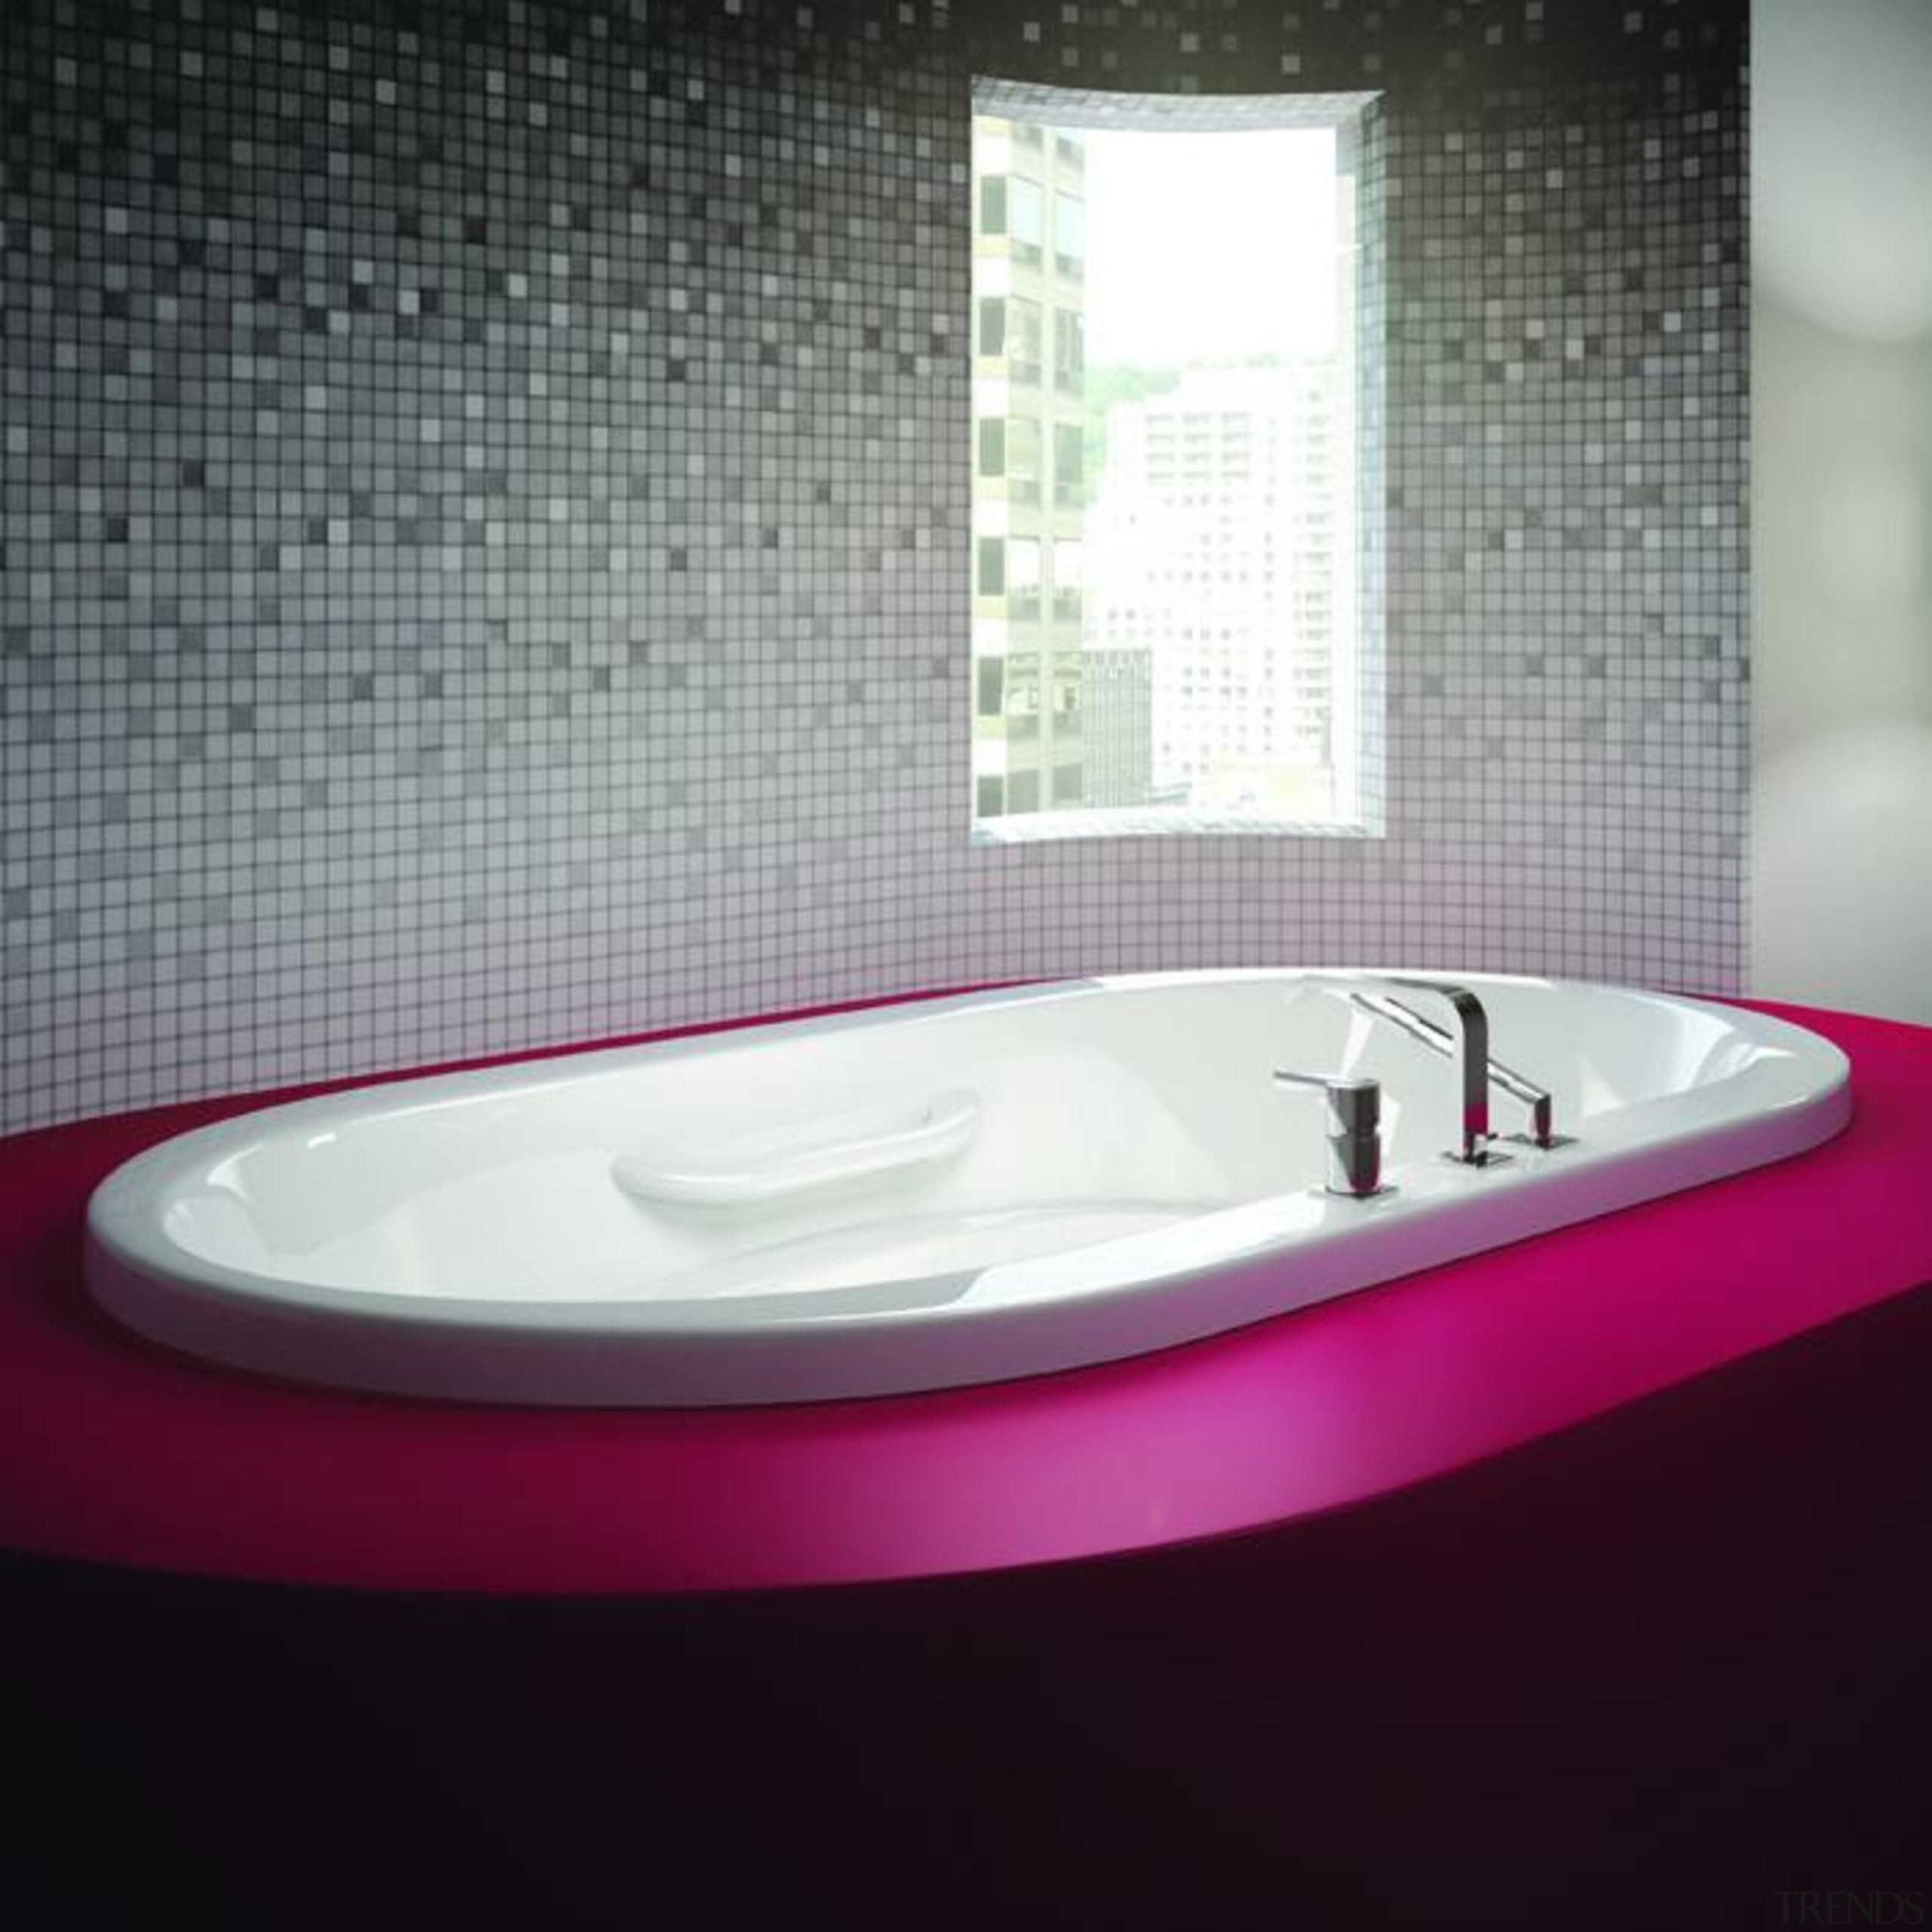 Amma7242 flat deck - Amma7242 flat deck - bathroom, bathroom sink, bathtub, ceramic, jacuzzi, plumbing fixture, product design, purple, sink, gray, black